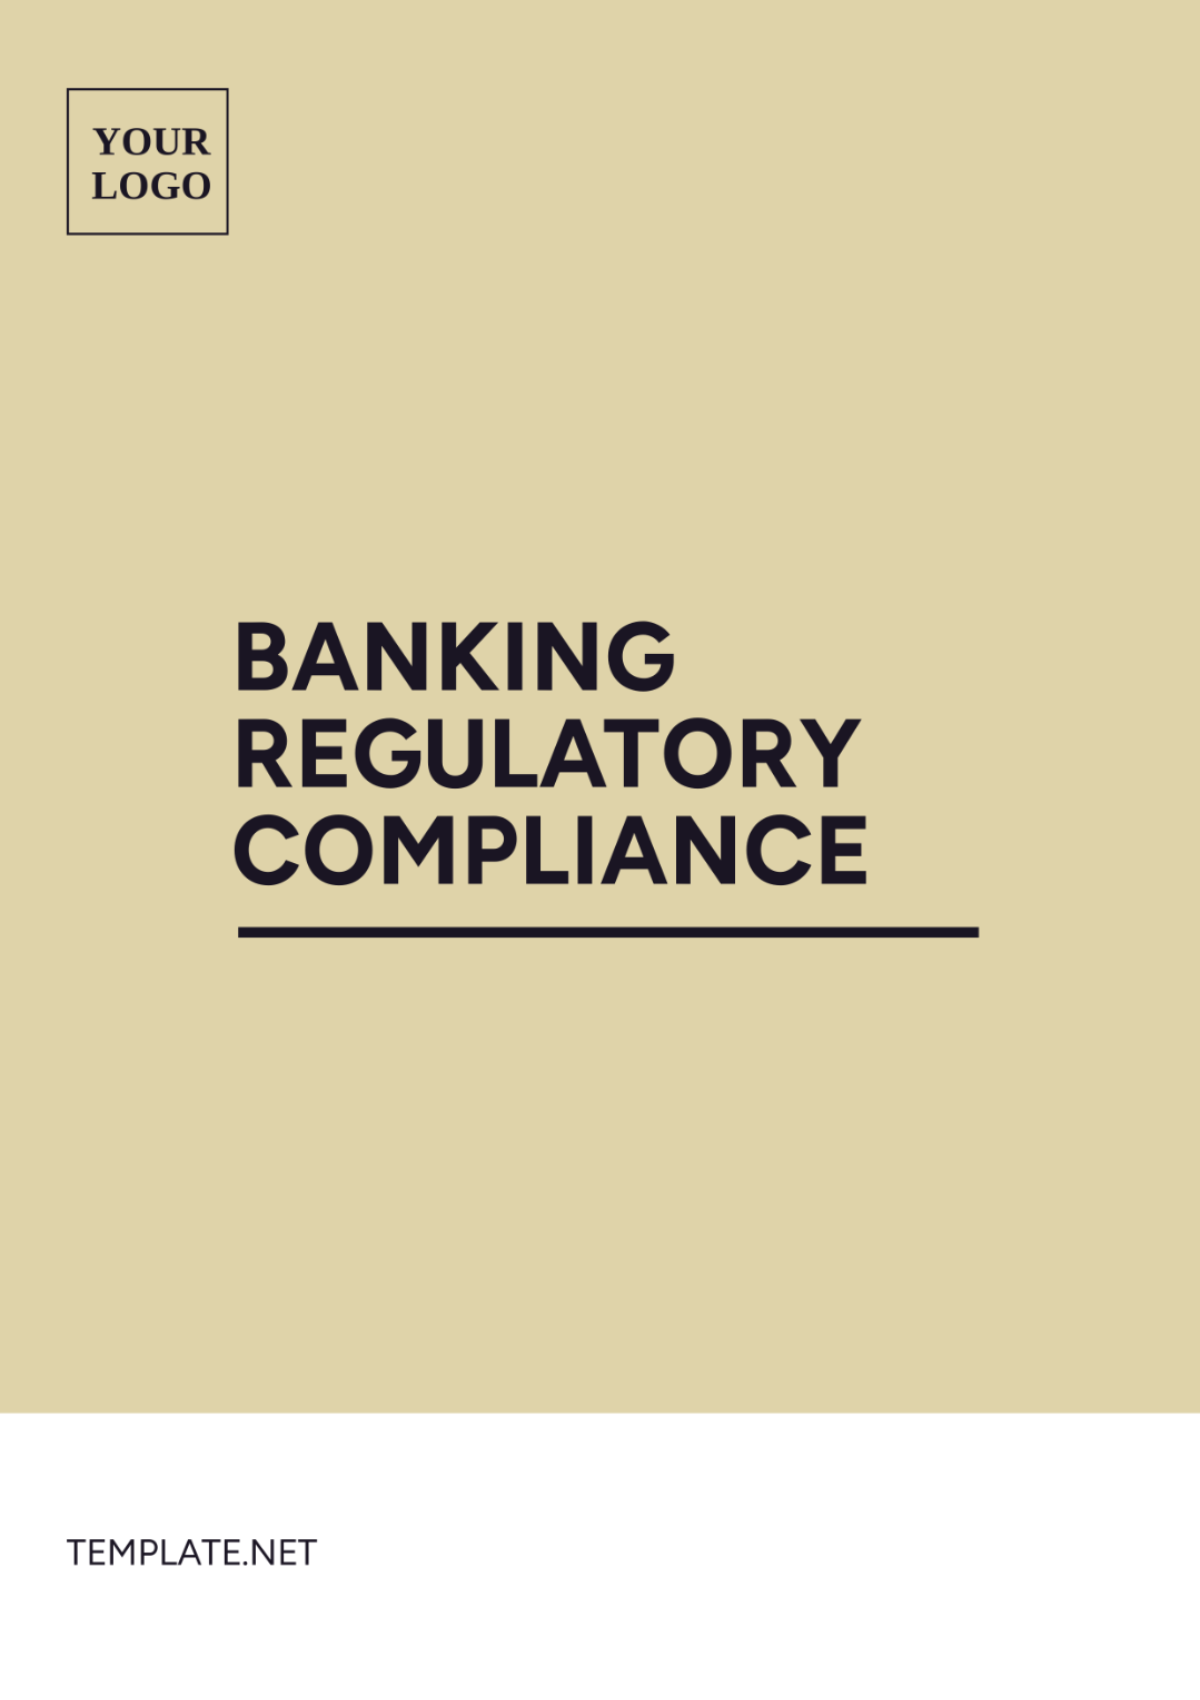 Banking Regulatory Compliance Checklist Template